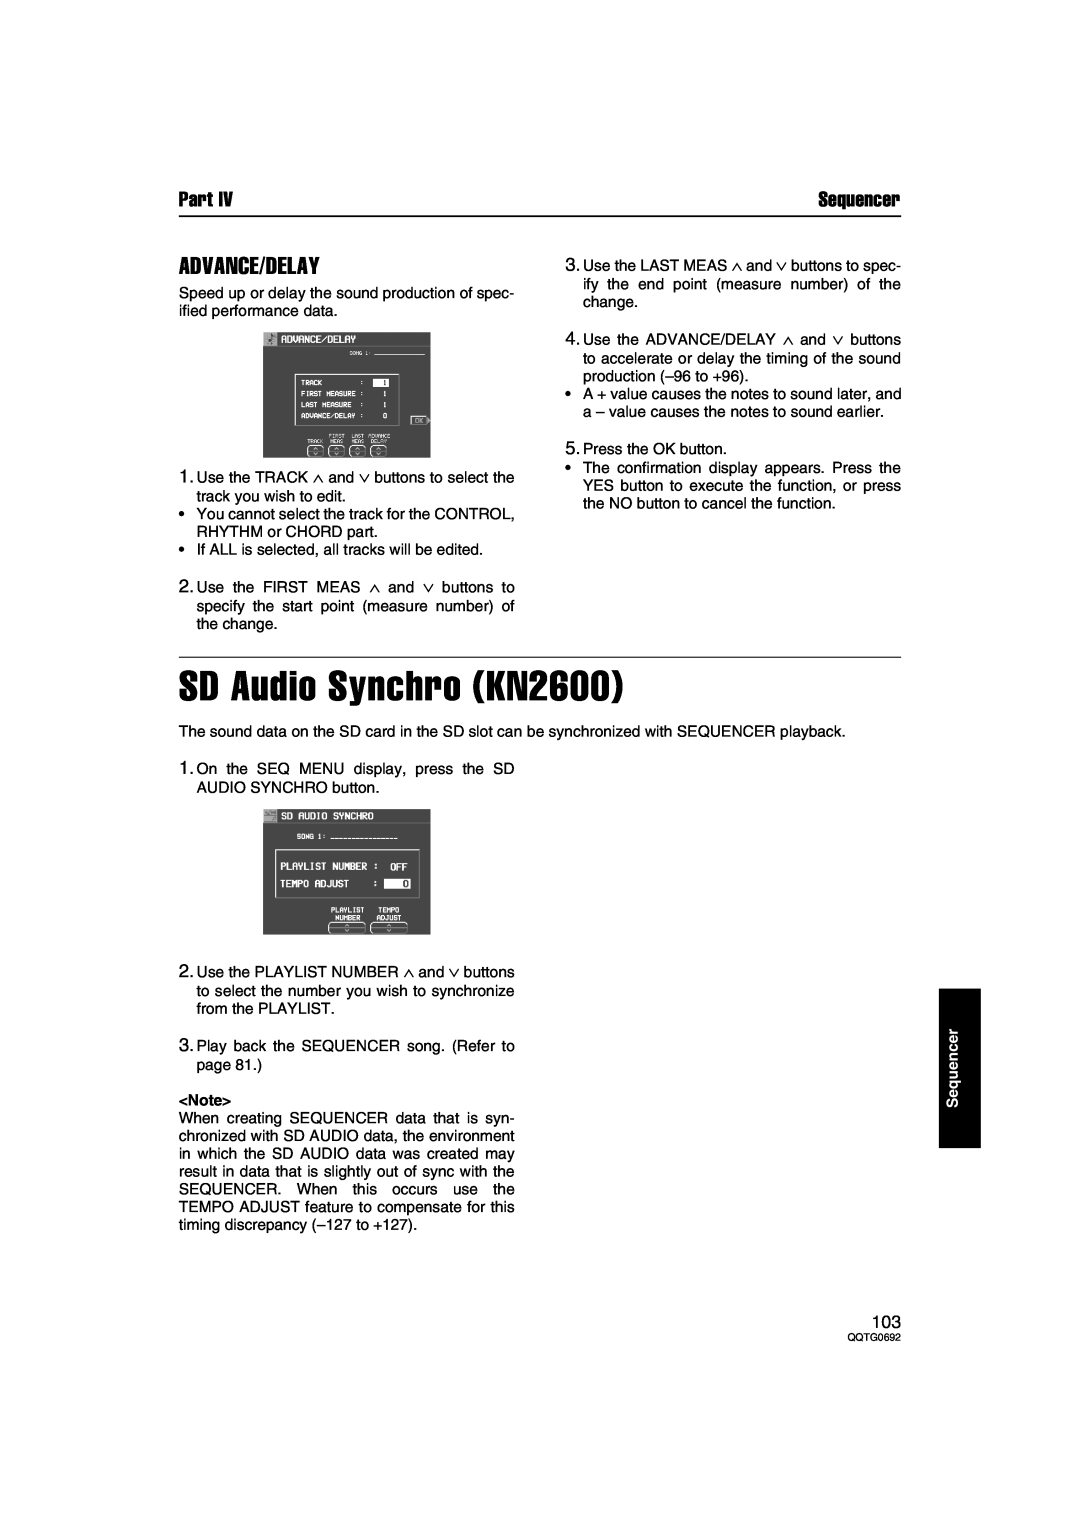 Panasonic SX-KN2400, SX-KN2600 manual SD Audio Synchro KN2600, Advance/Delay, Sequencer, Part 